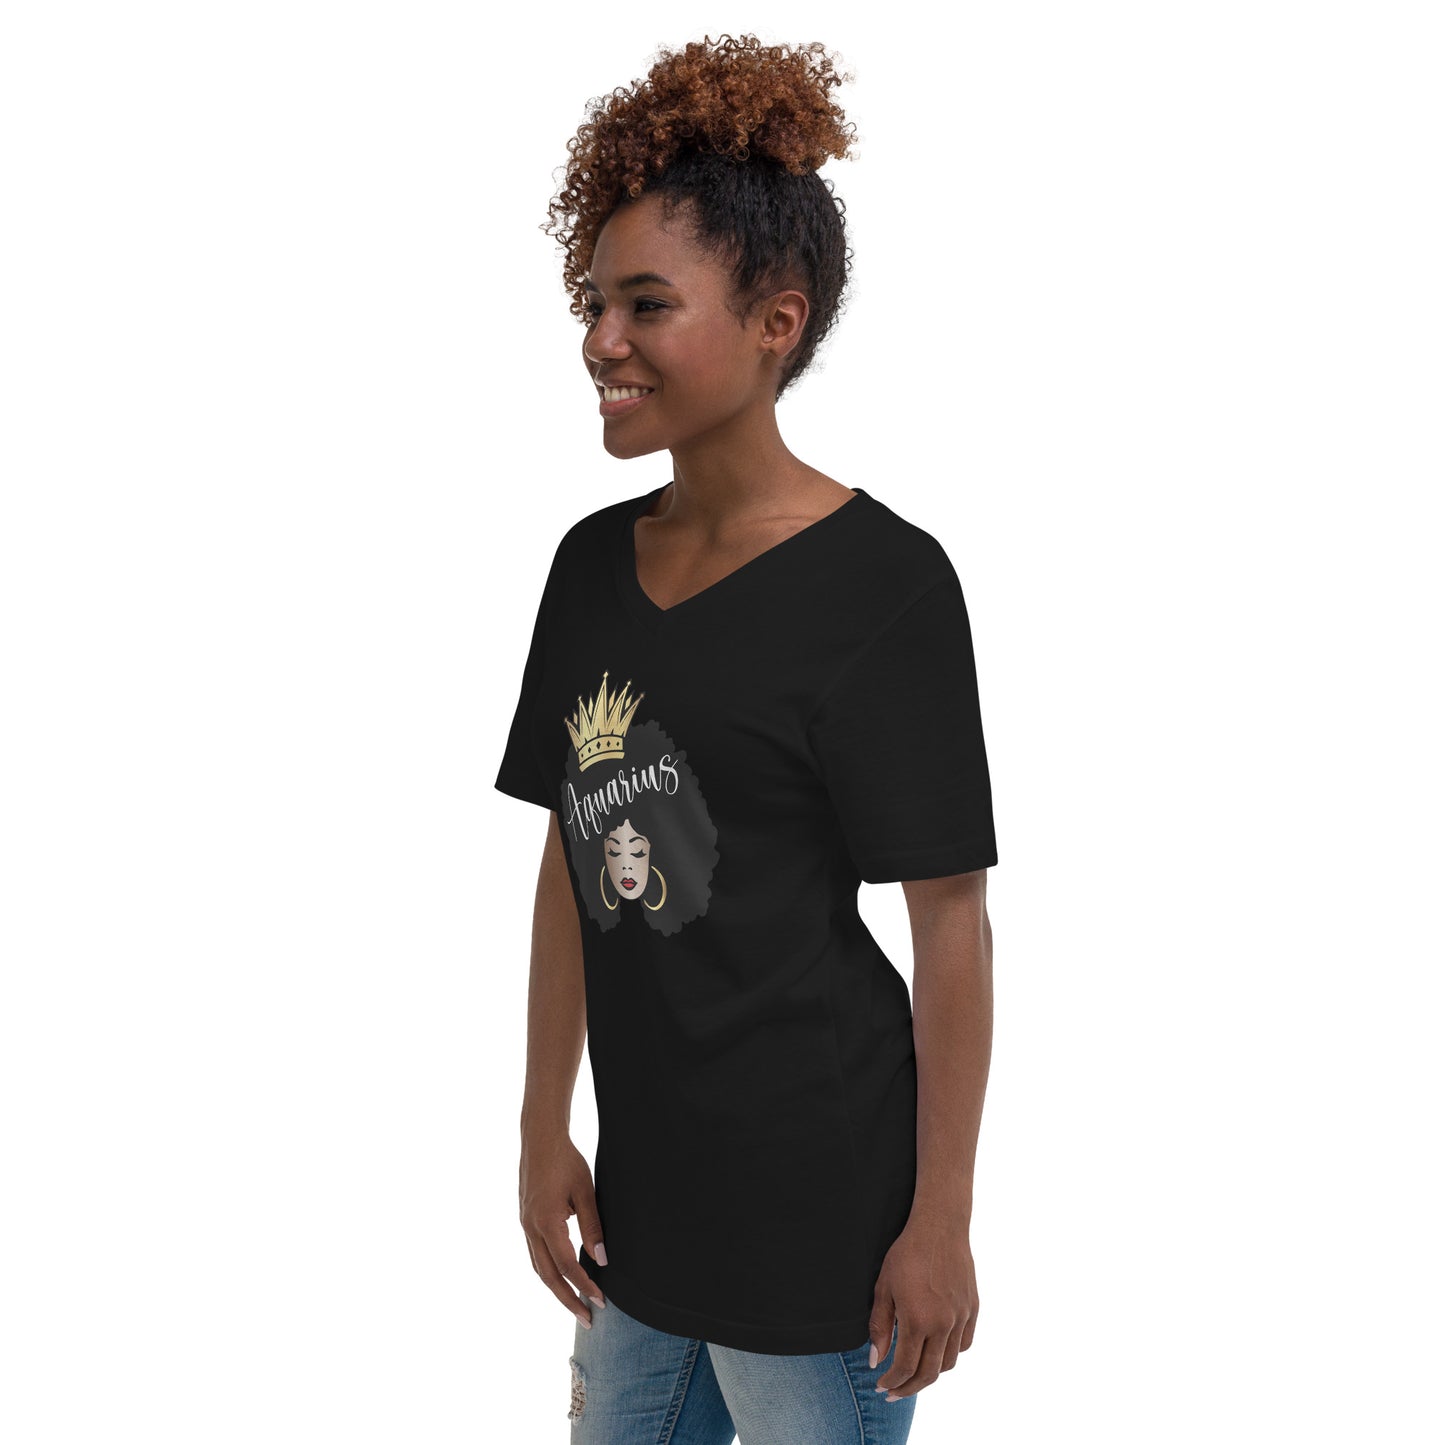 Women's Short Sleeve V-Neck T-Shirt - Aquarius Afro Queen